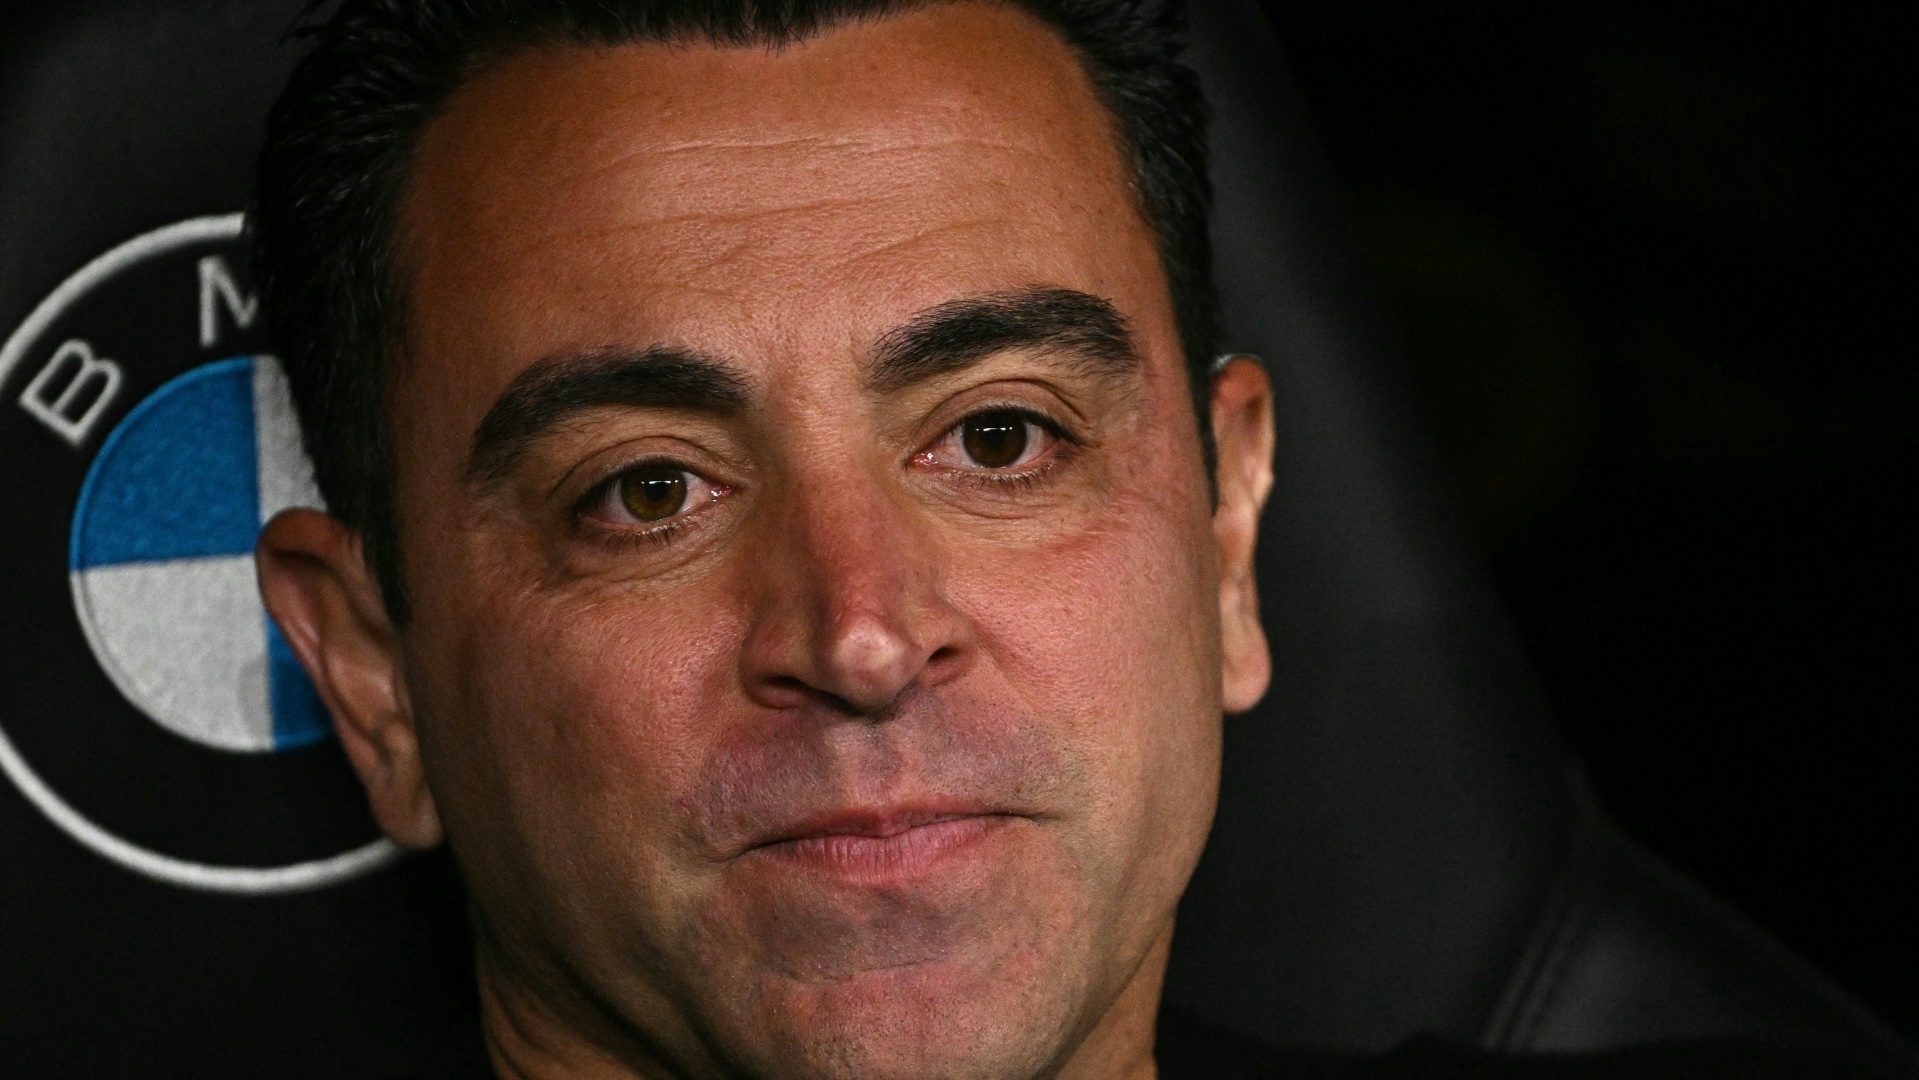 Xavi bleibt doch Trainer in Barcelona